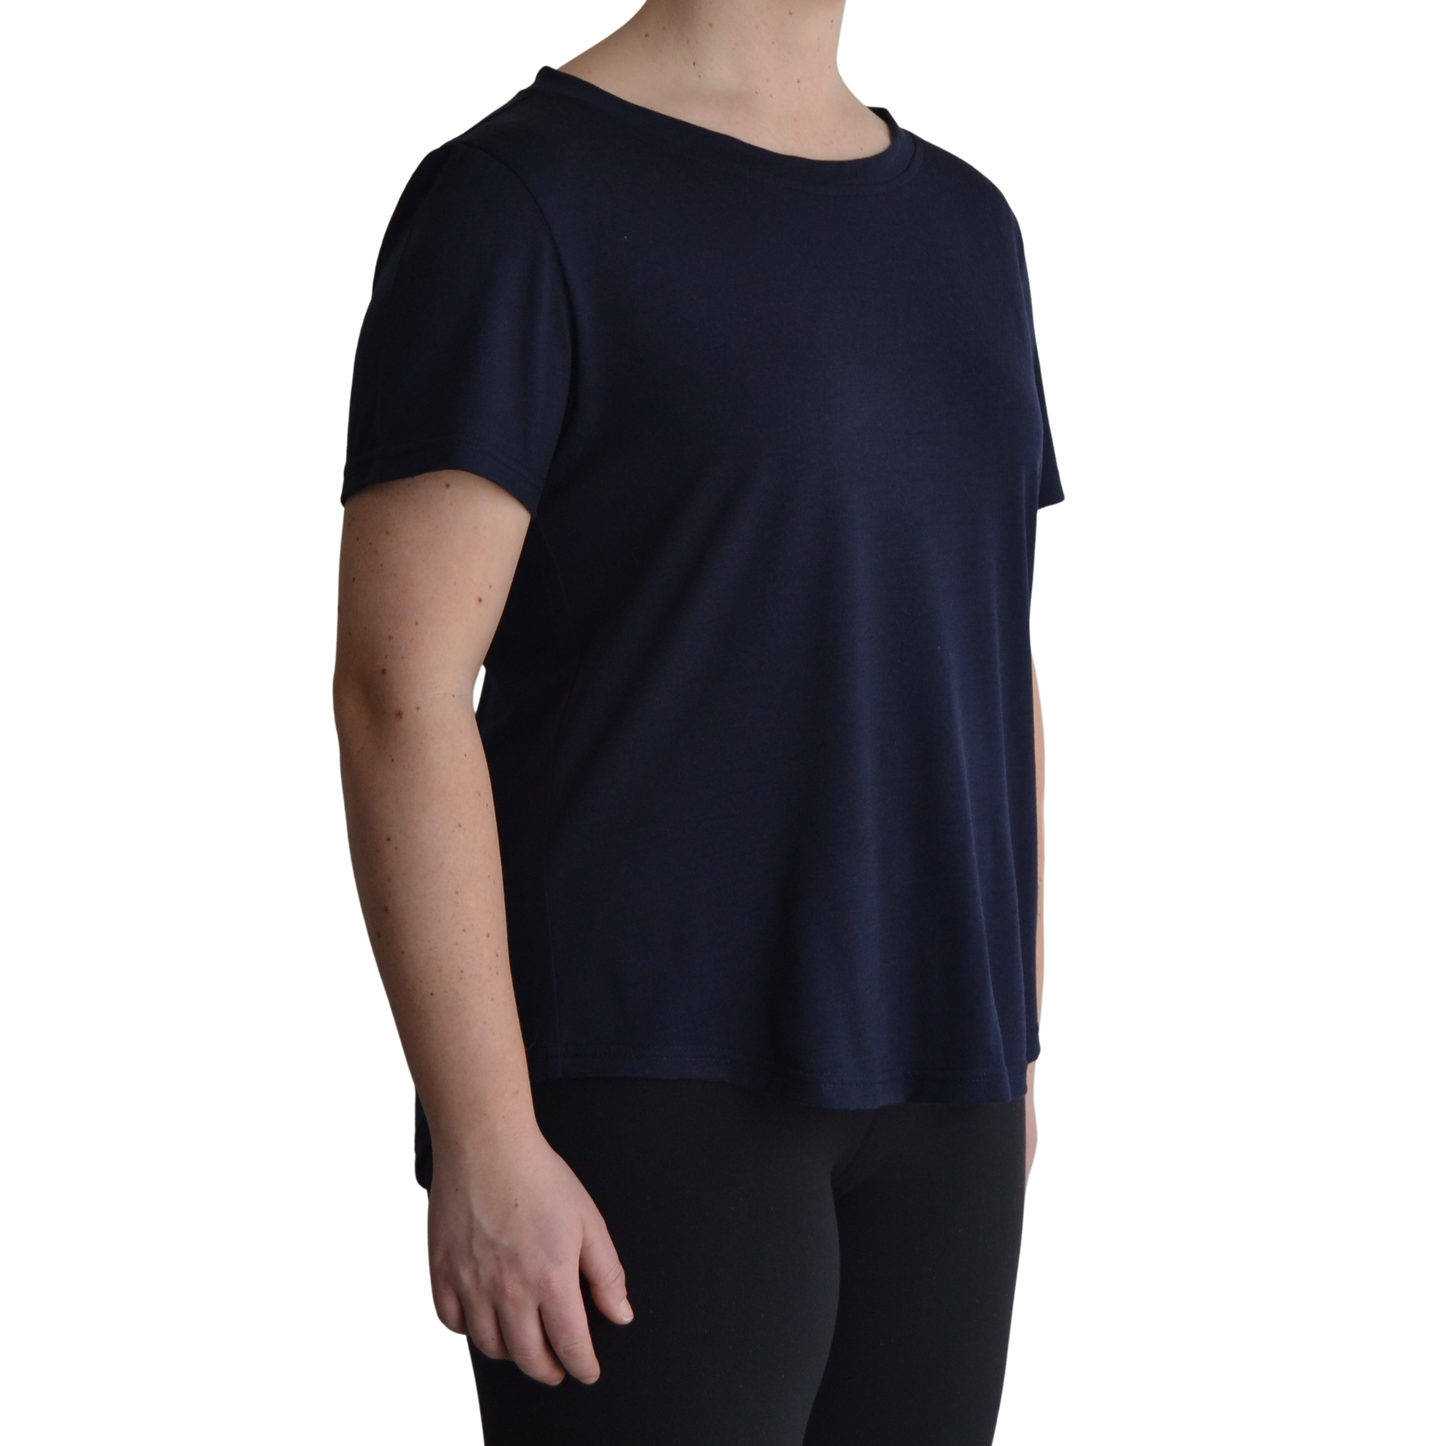 Links merino short sleeve t-shirt in navy blue. Model faces forward on a 45 degree angle